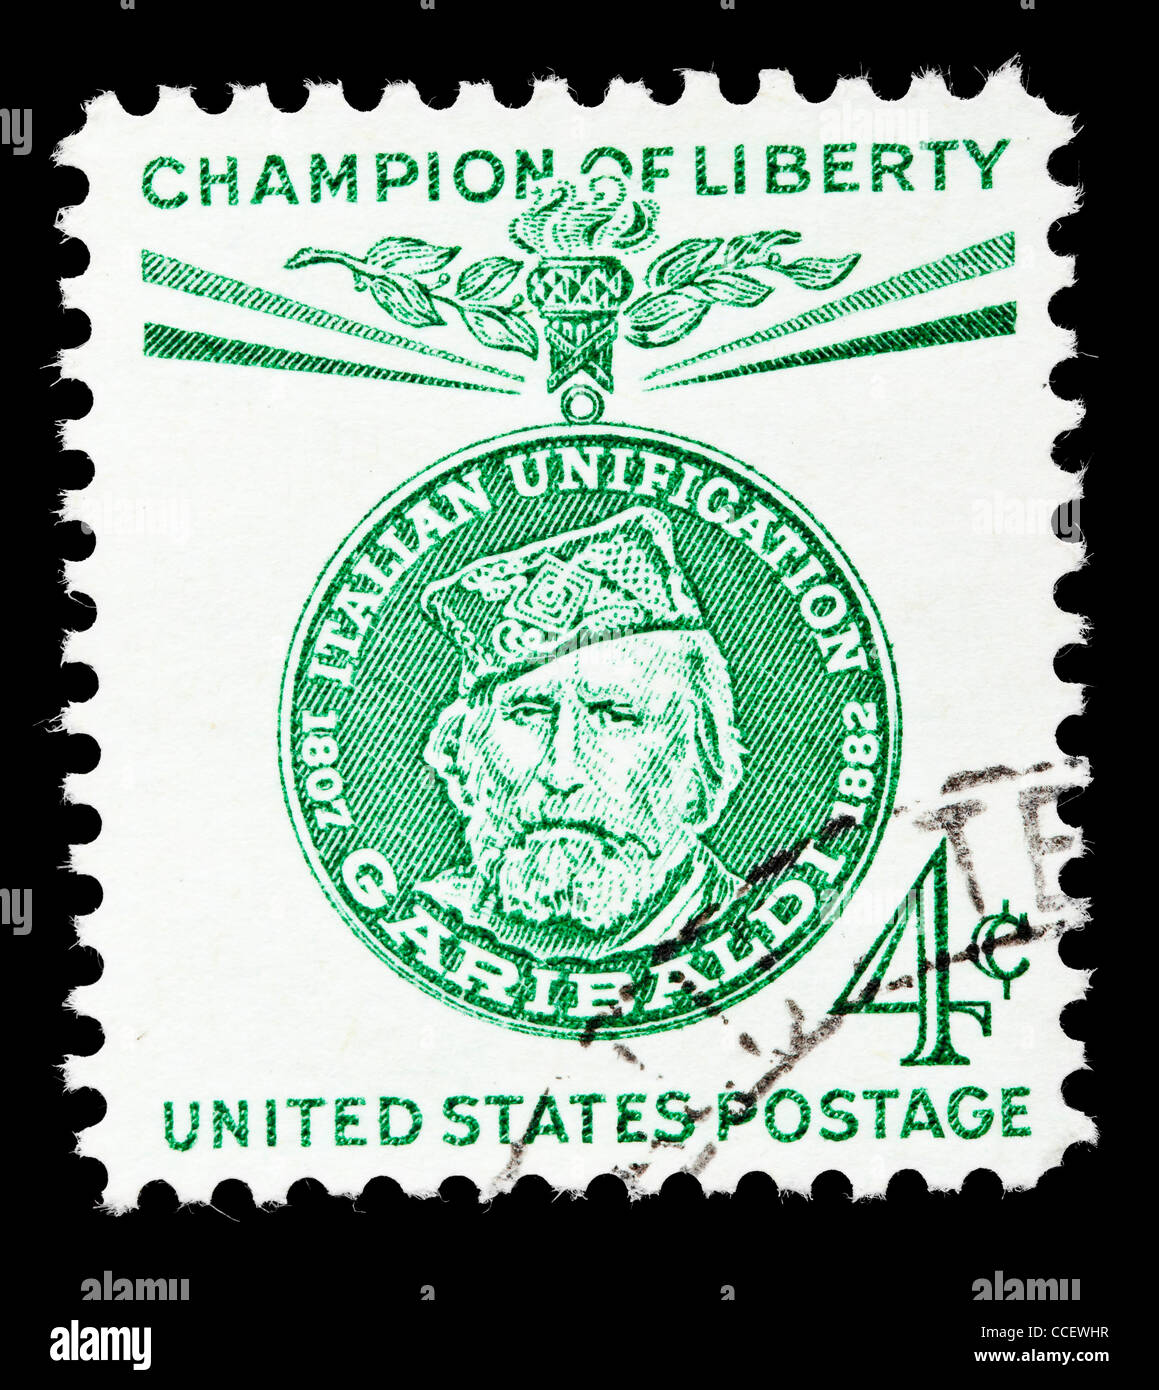 Postage stamp: United States Postage, Champion of Liberty Giuseppe  Garibaldi, 4 cent, 1960, stamped Stock Photo - Alamy